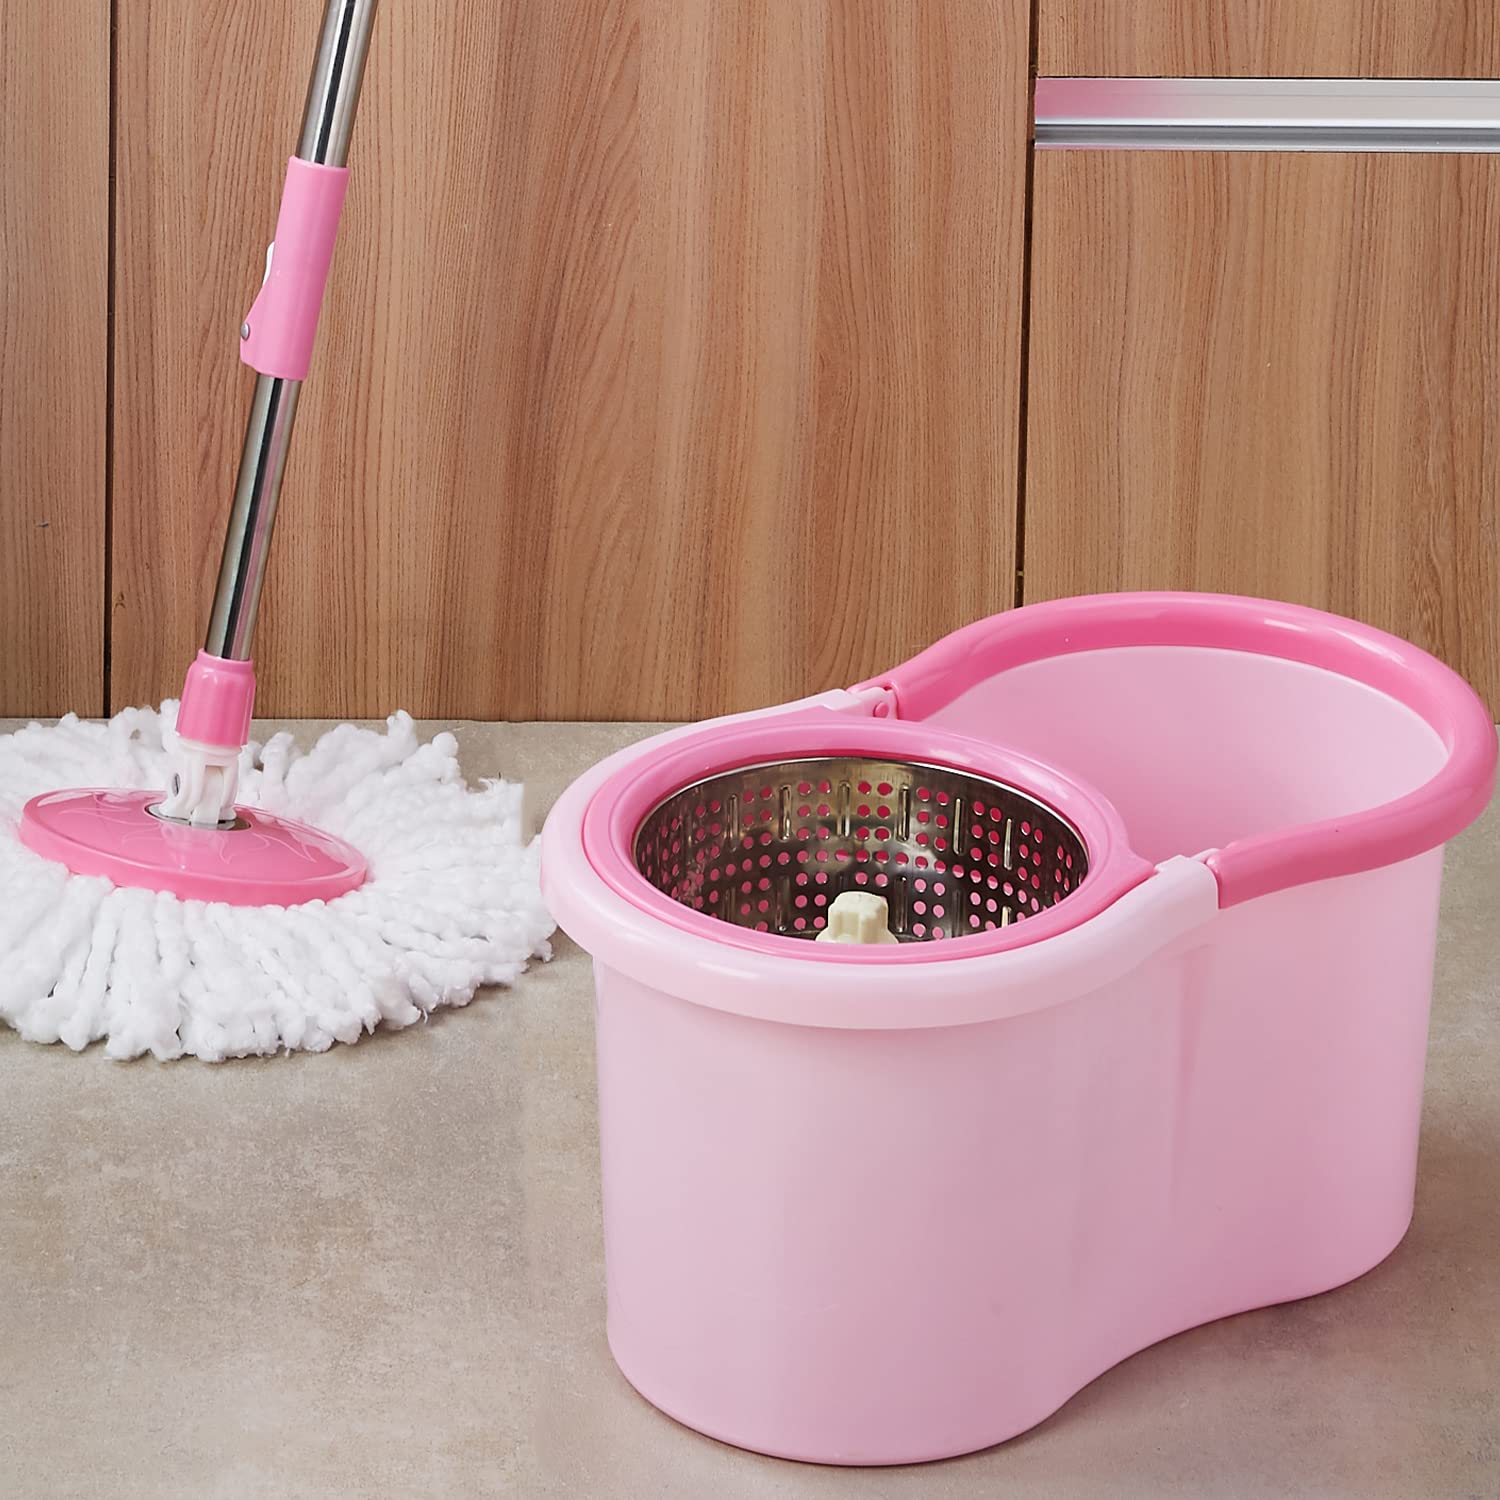 Presto! Spin Mop with Steel Wringer Plastic Bucket Set, Pink